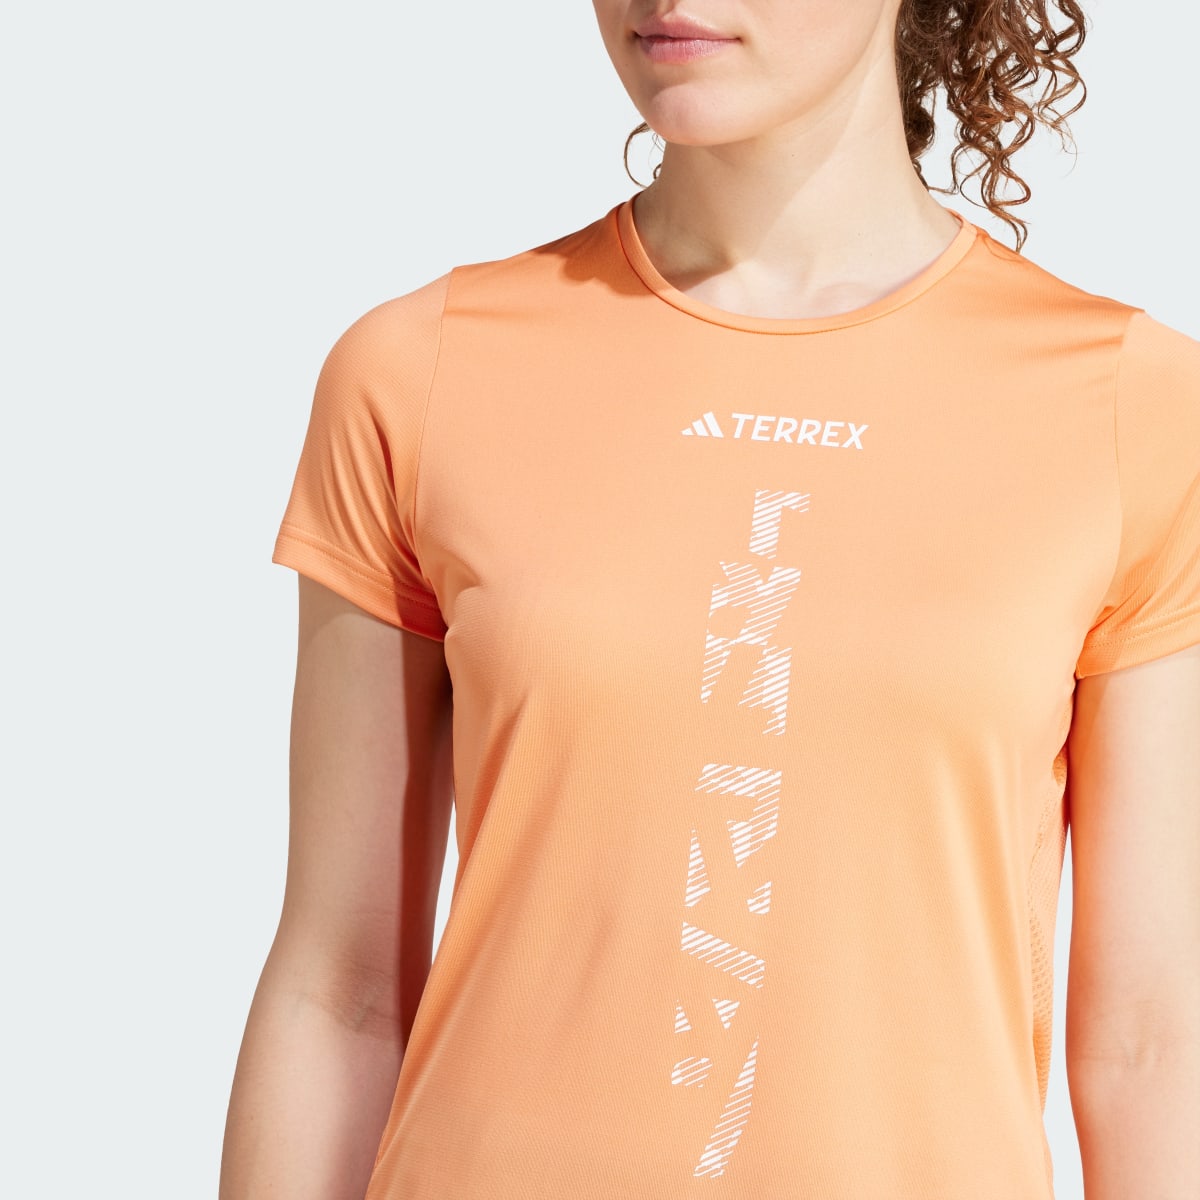 Adidas TERREX Agravic Trail Running T-Shirt. 6